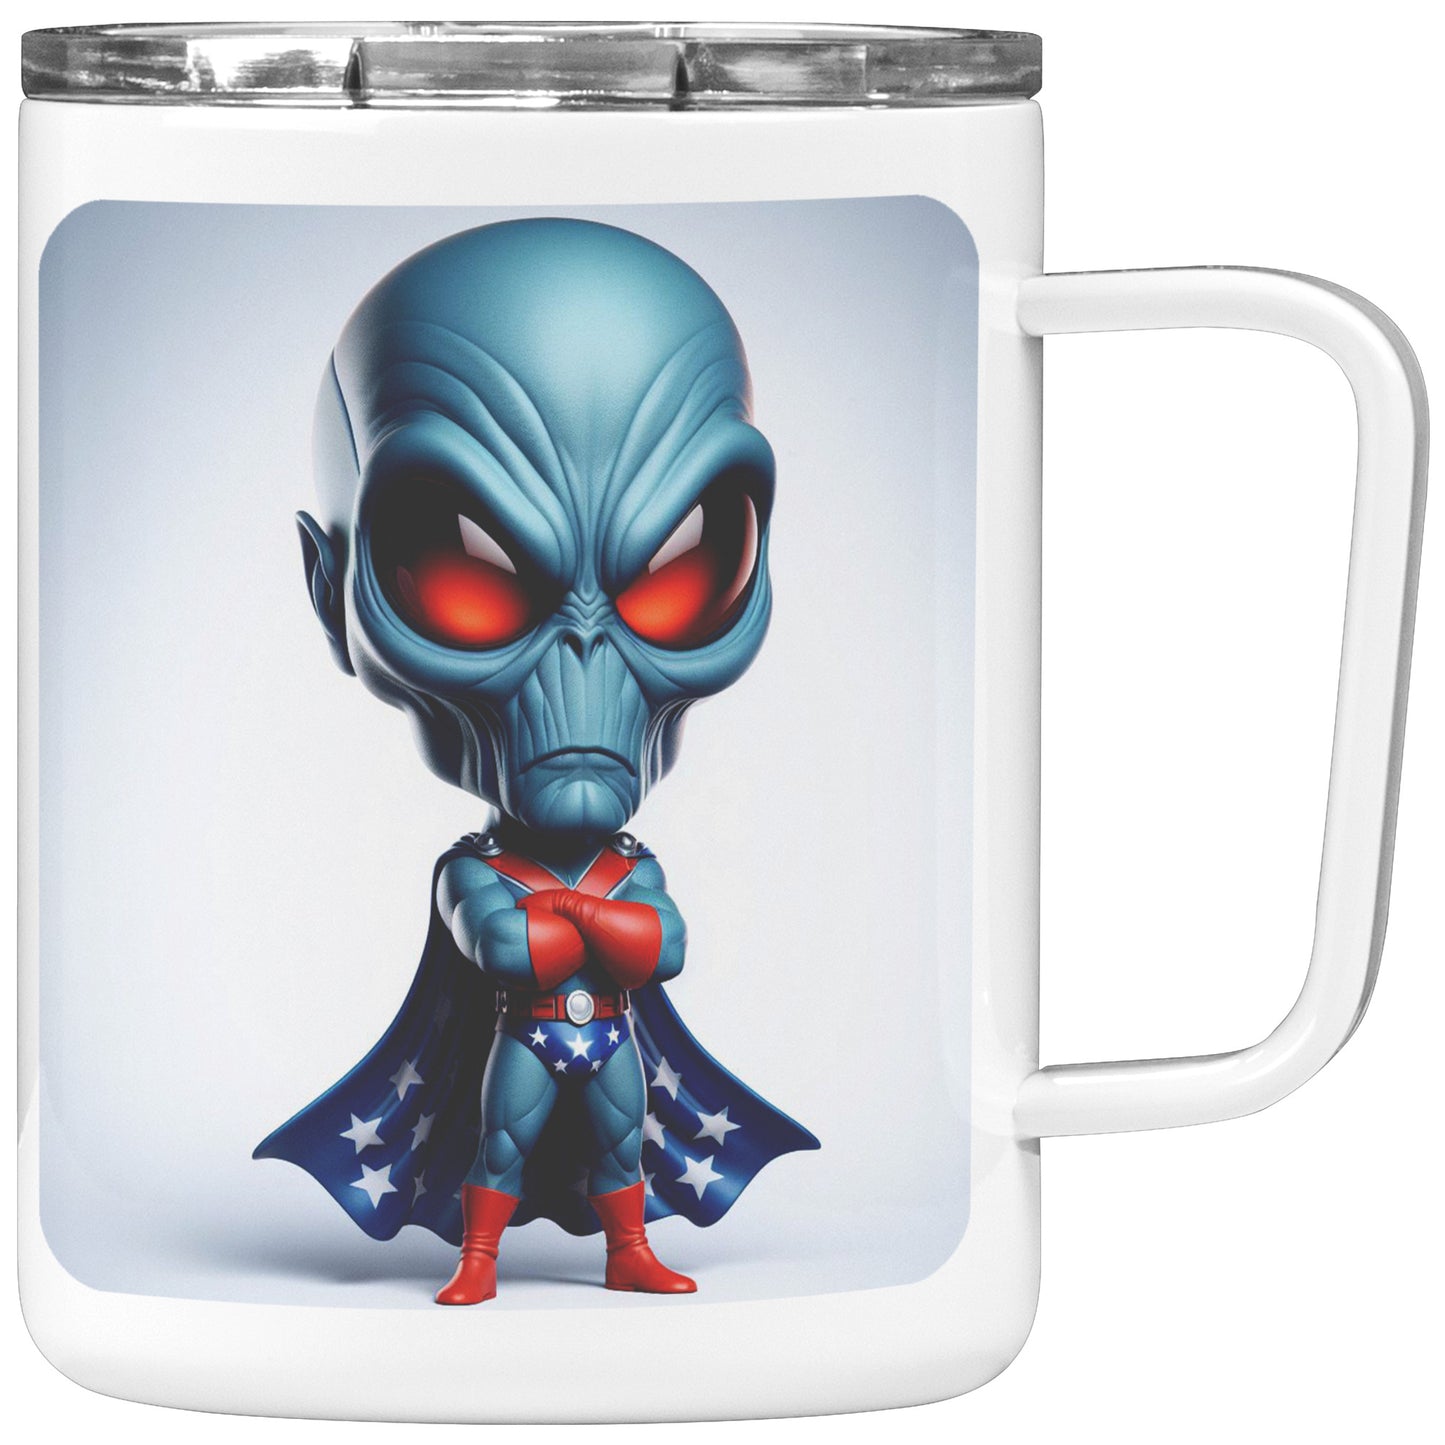 Martian Alien Caricature - Coffee Mug #5